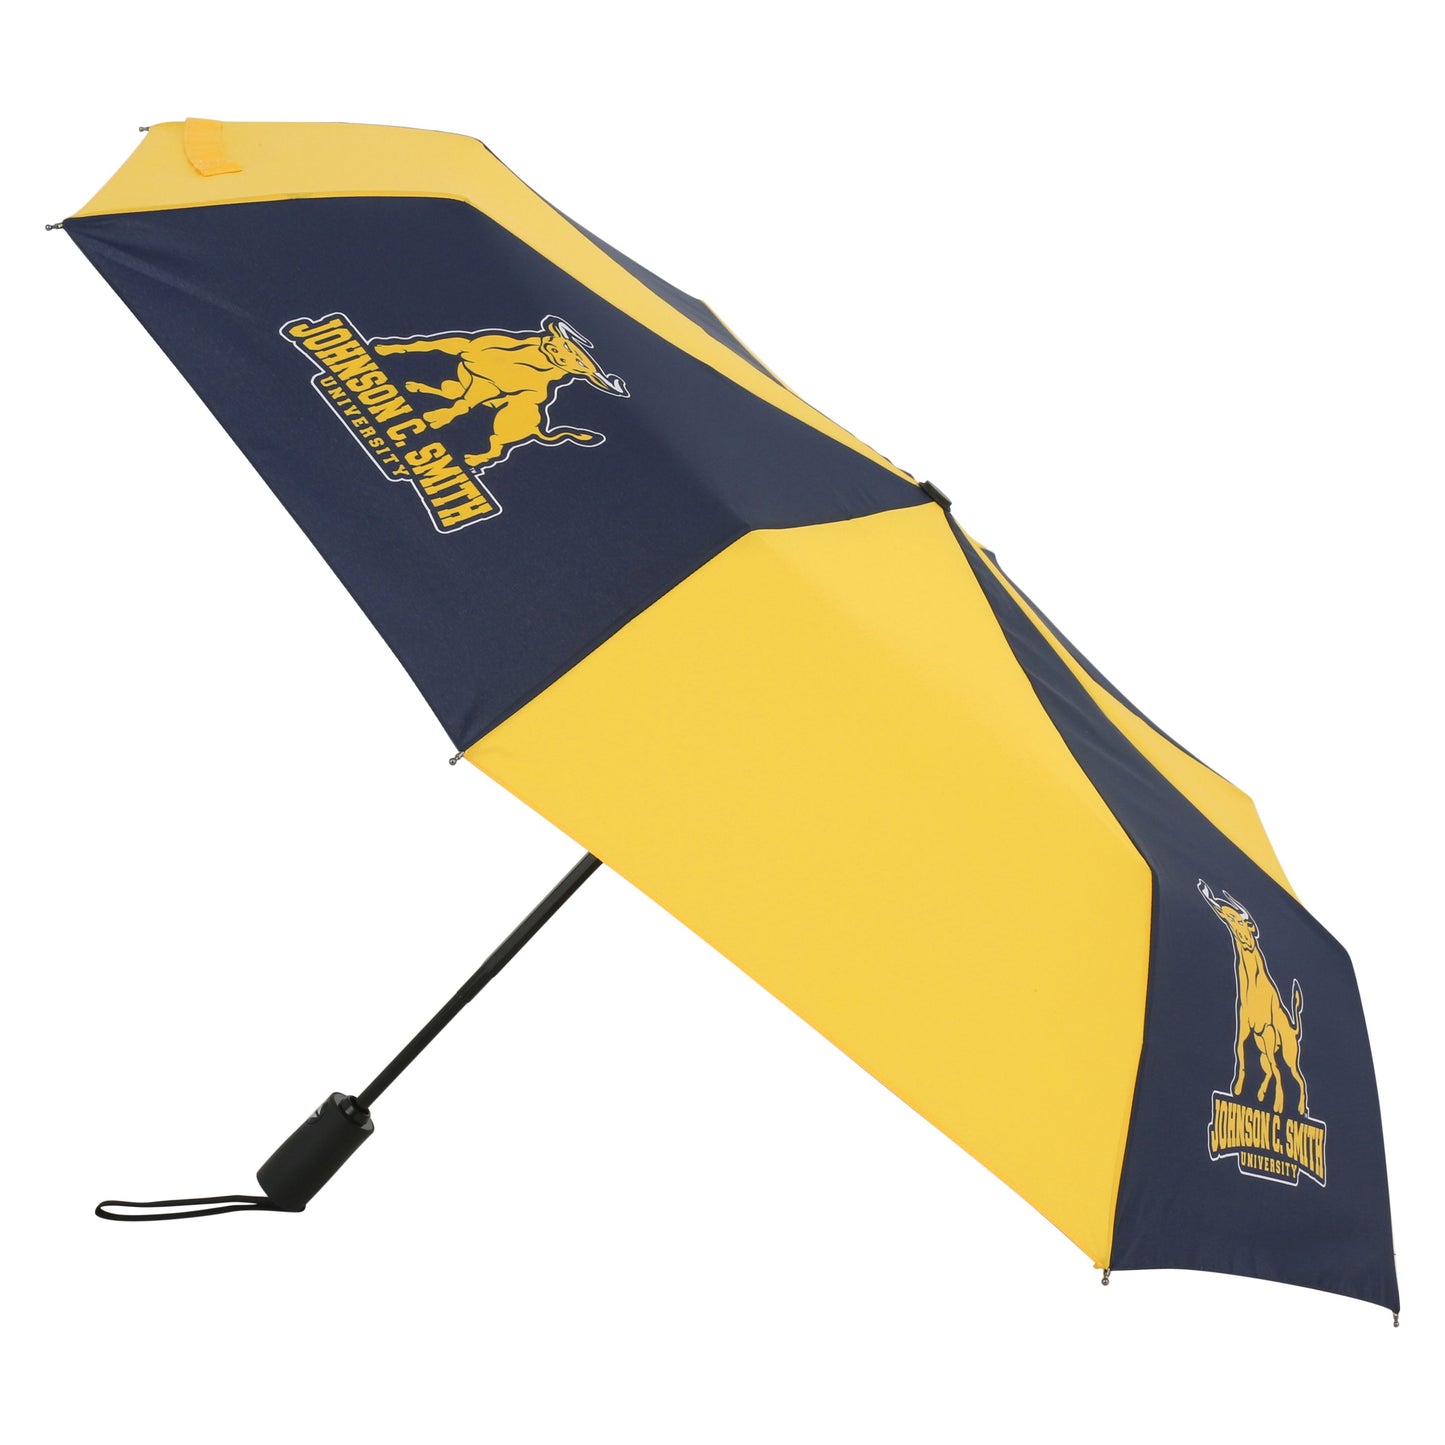 JCSU Compact Umbrella - Officially Licensed